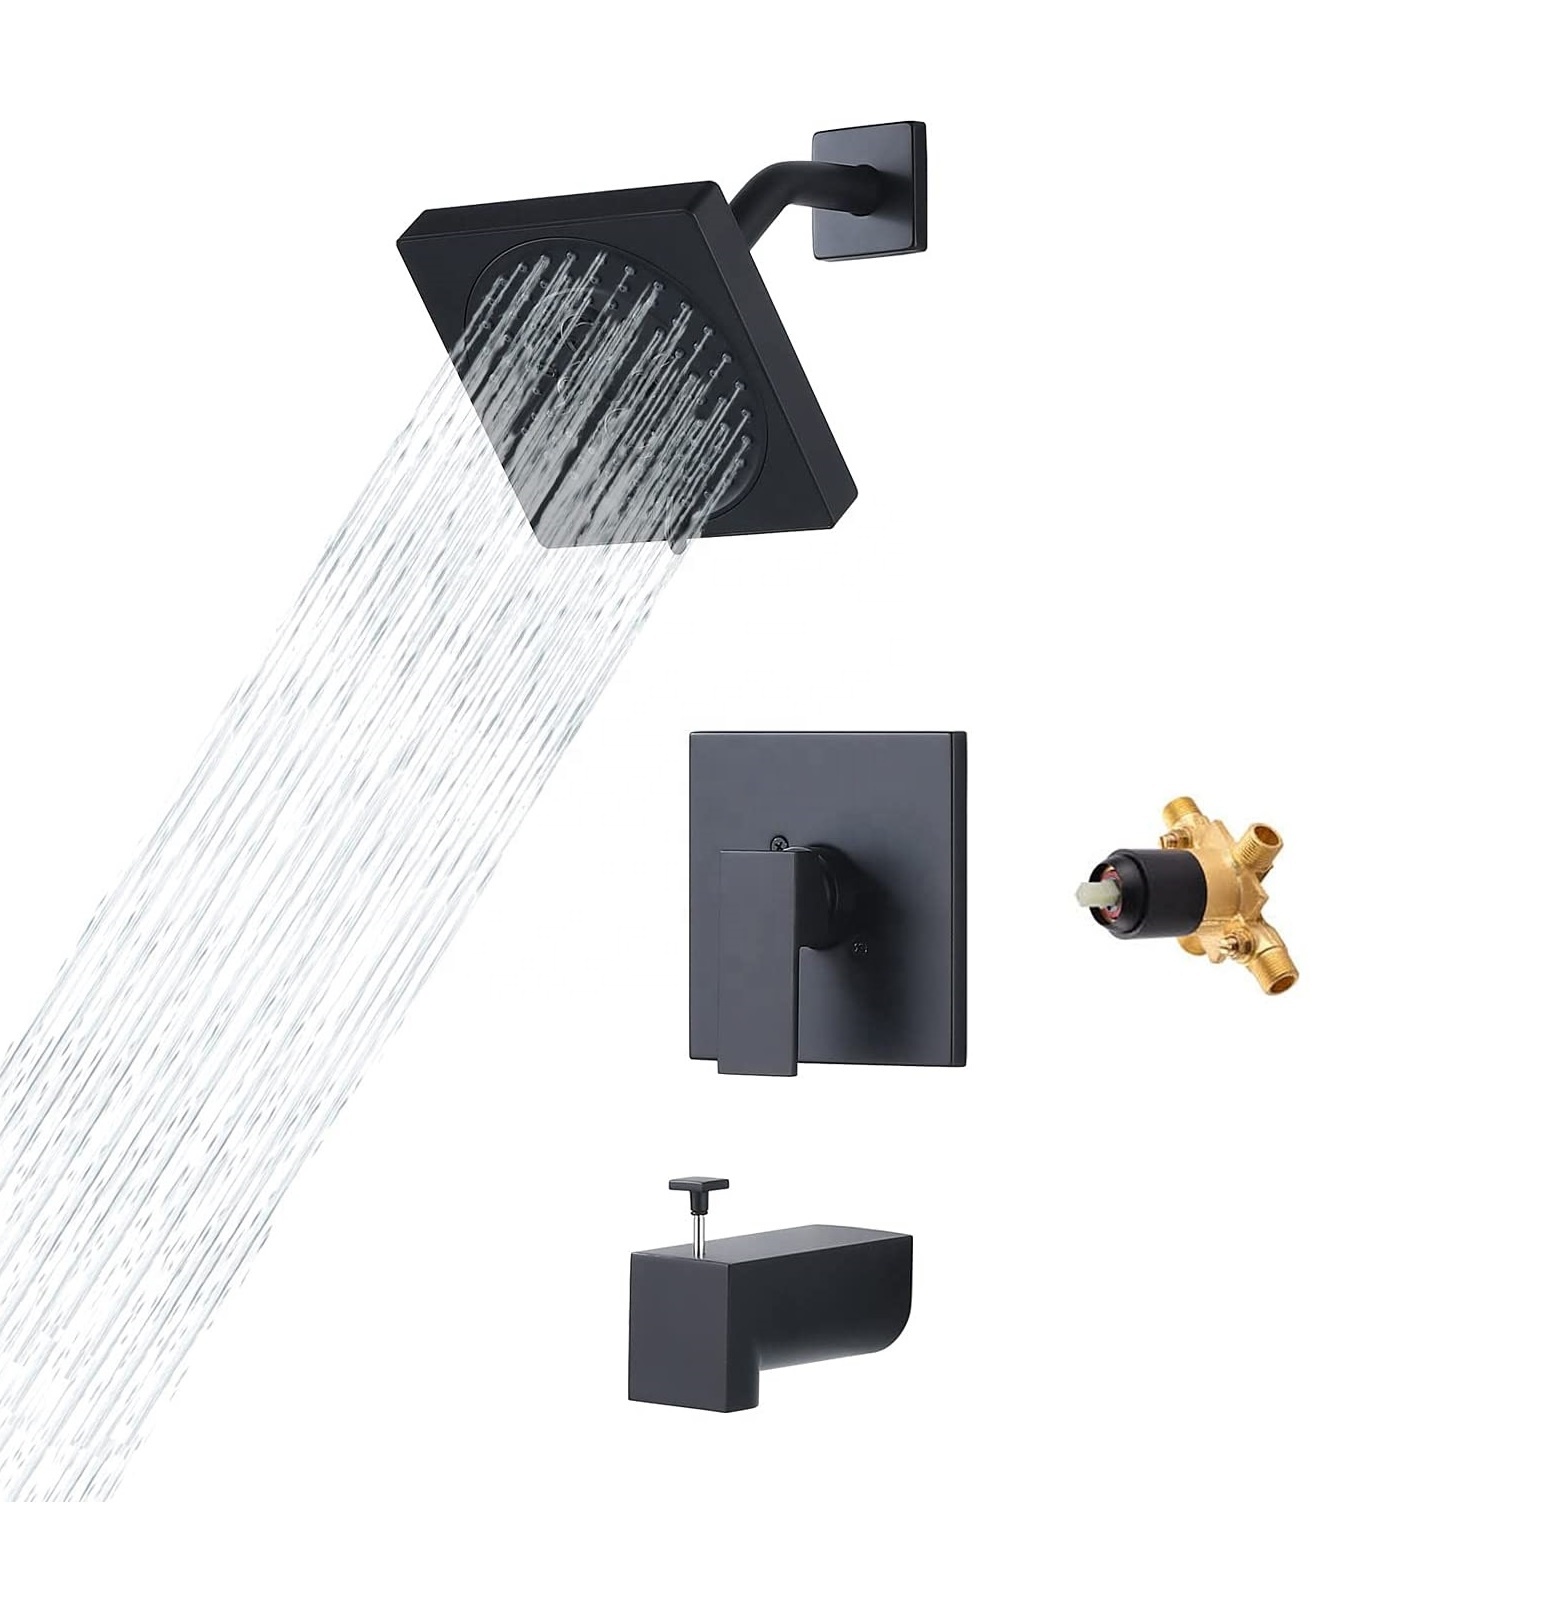 Grifo de ducha de pared ligero, útil, negro mate de alto estándar, juego de ducha de lluvia, grifos de baño y ducha